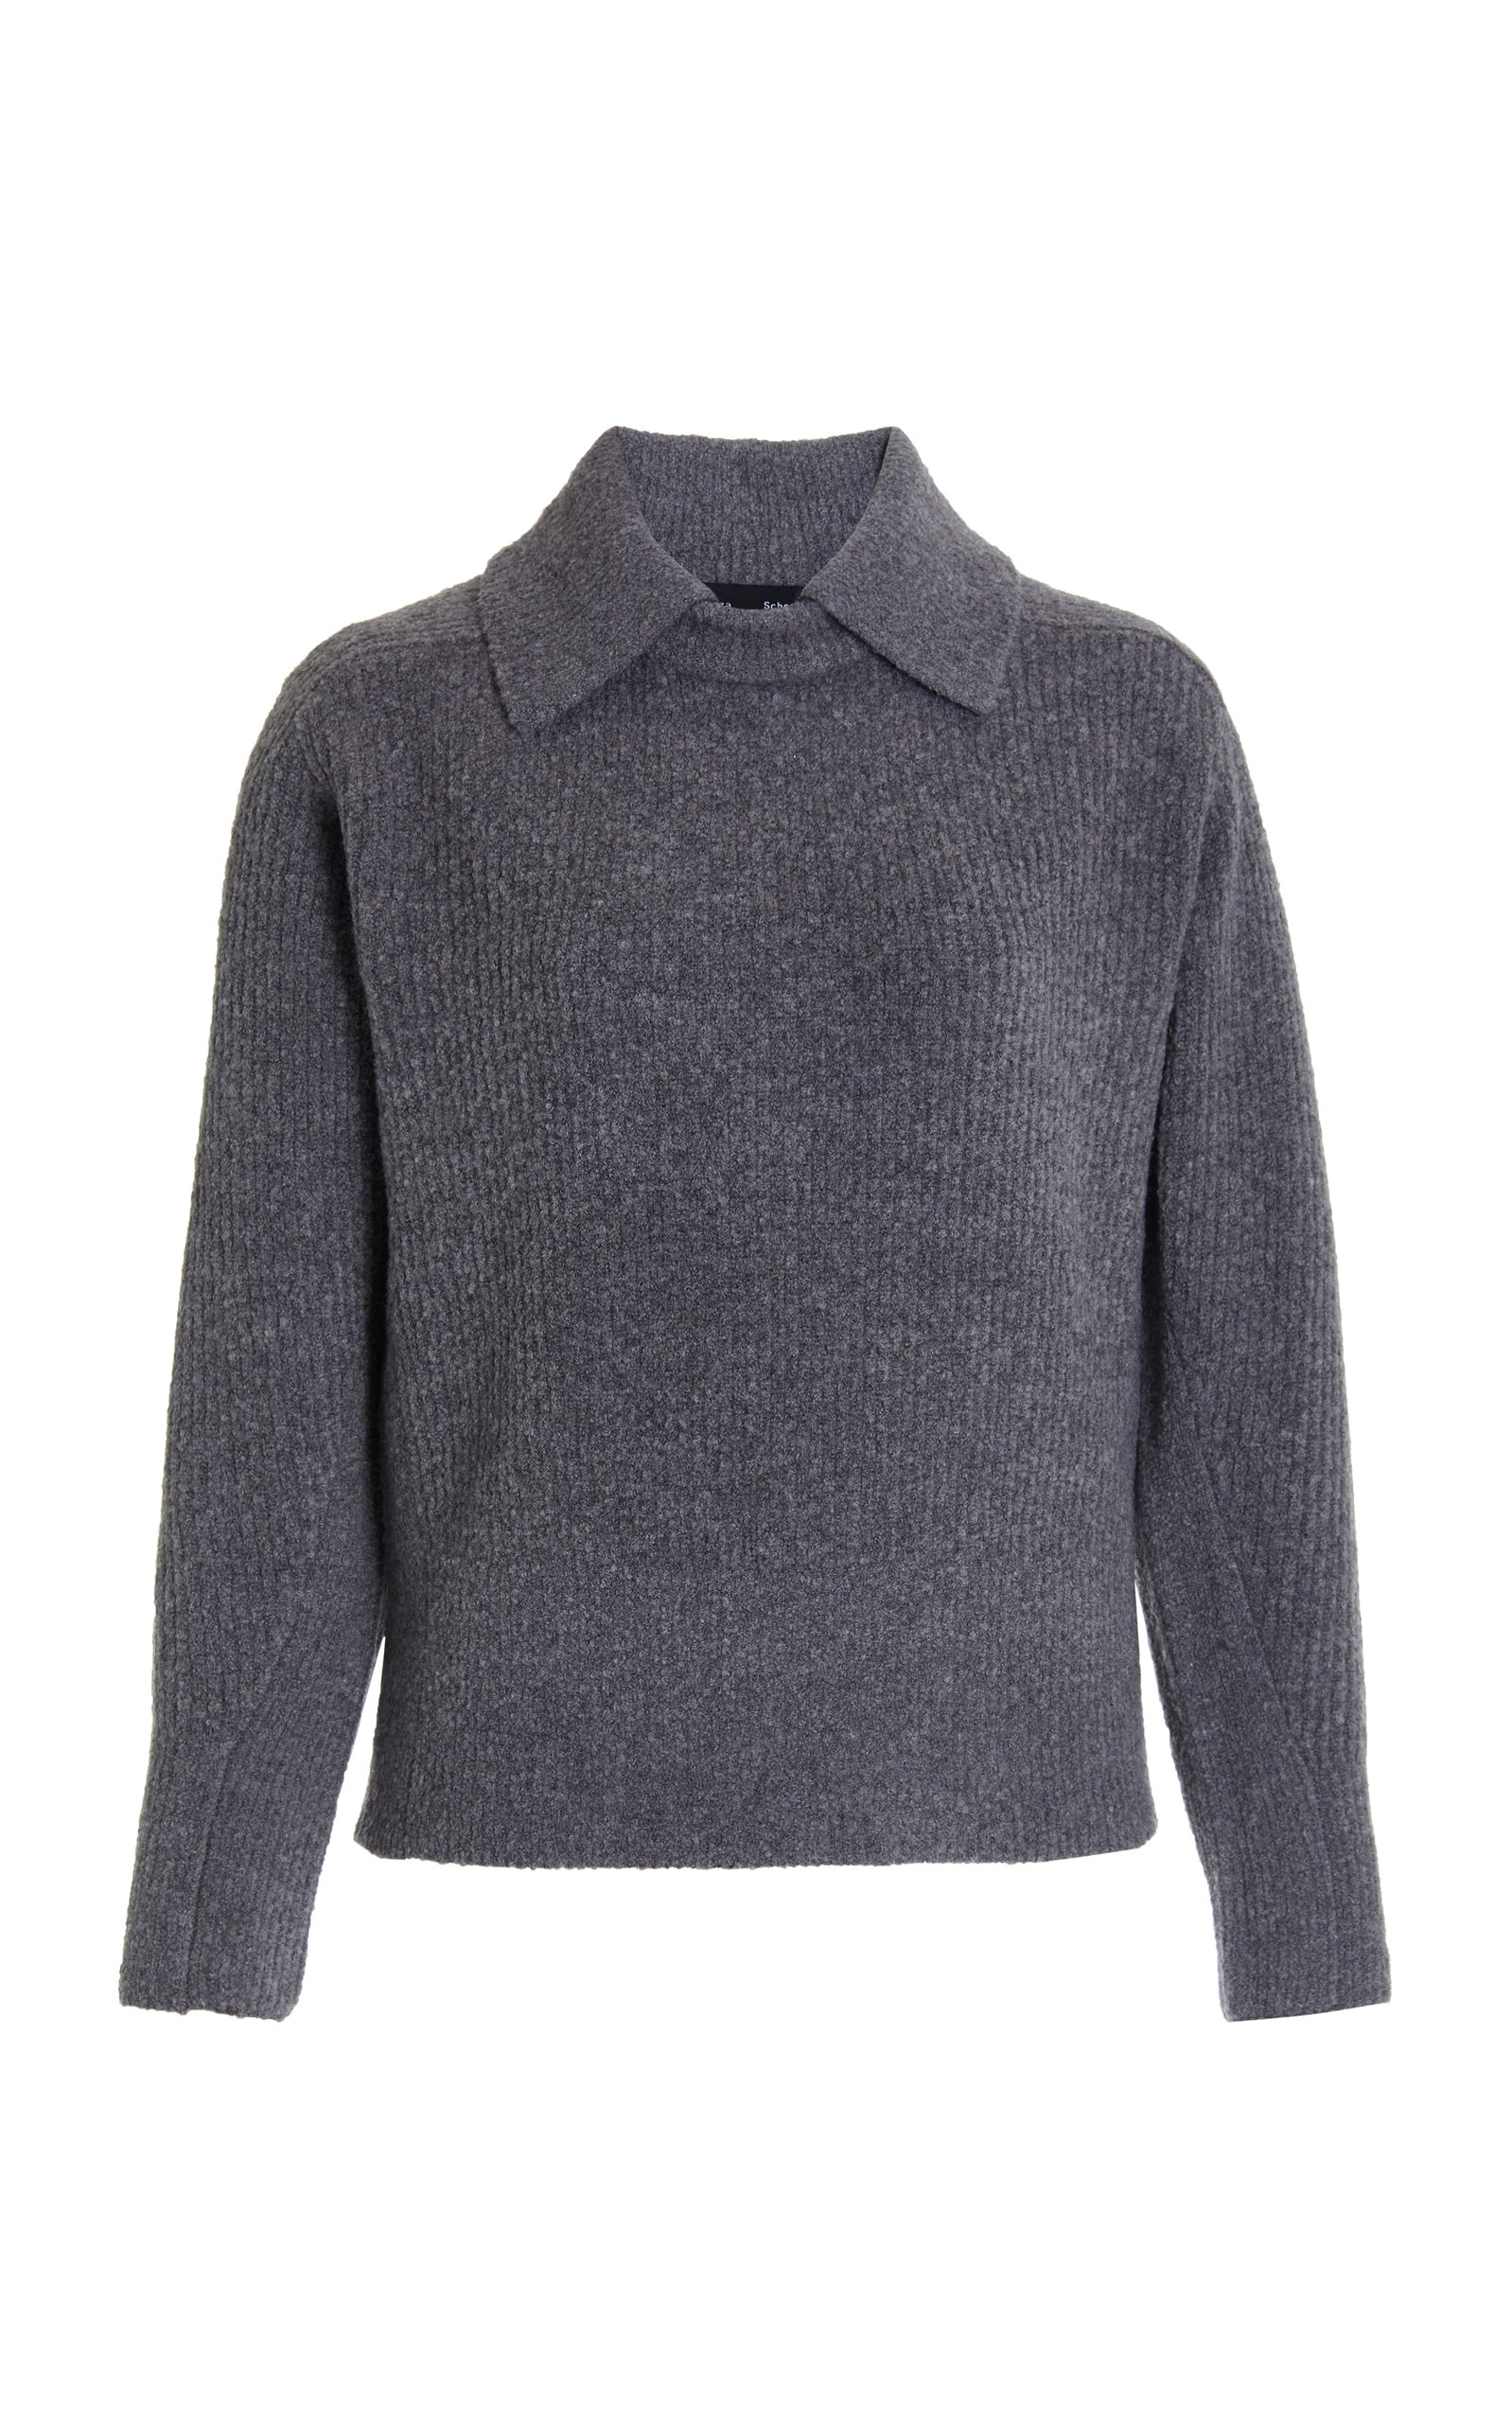 Proenza Schouler - Women's Lofty Knit Sweater - Grey - Moda Operandi